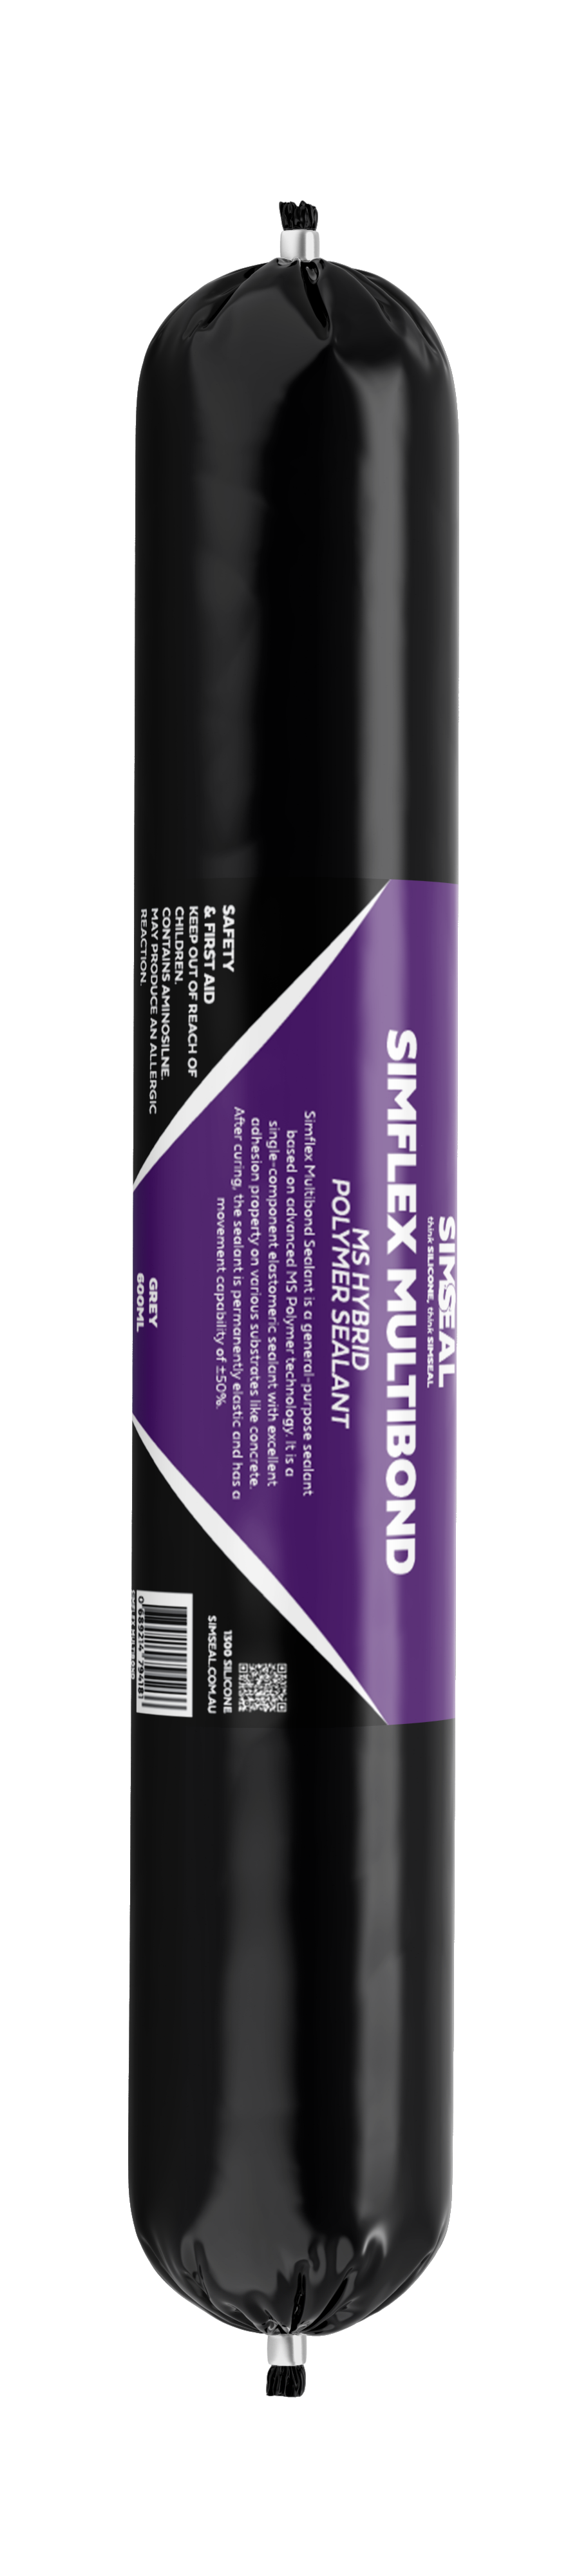 Simflex Facade advanced MS Hybrid polymer sealant 600ml